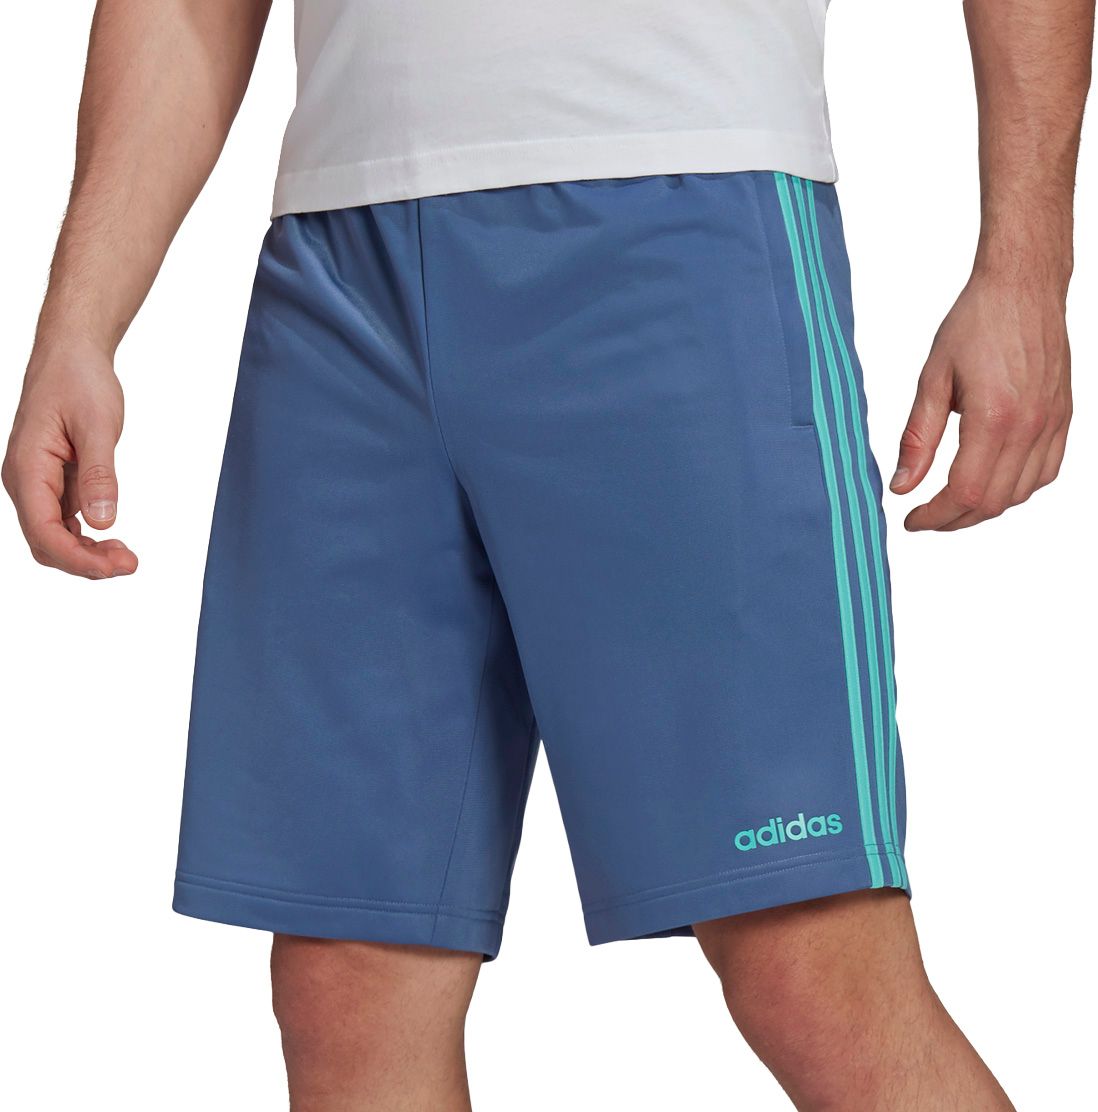 adidas men's essential 3 stripe shorts